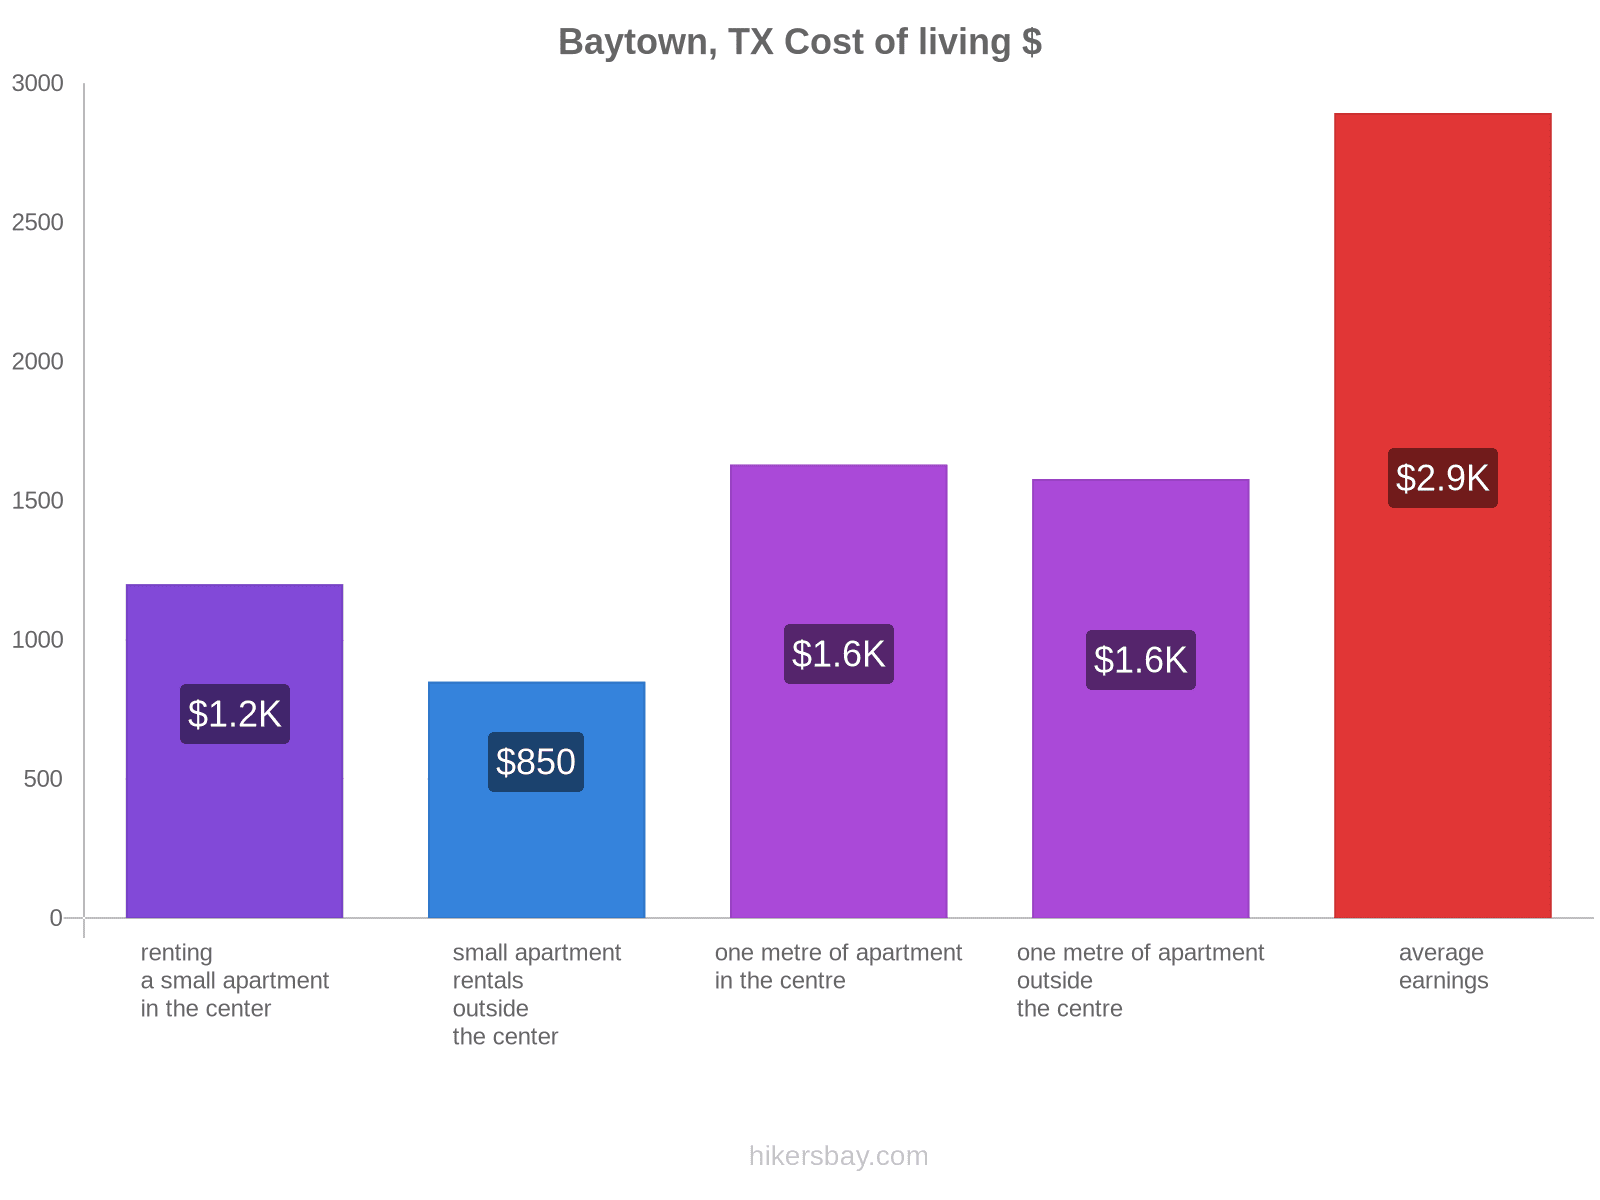 Baytown, TX cost of living hikersbay.com